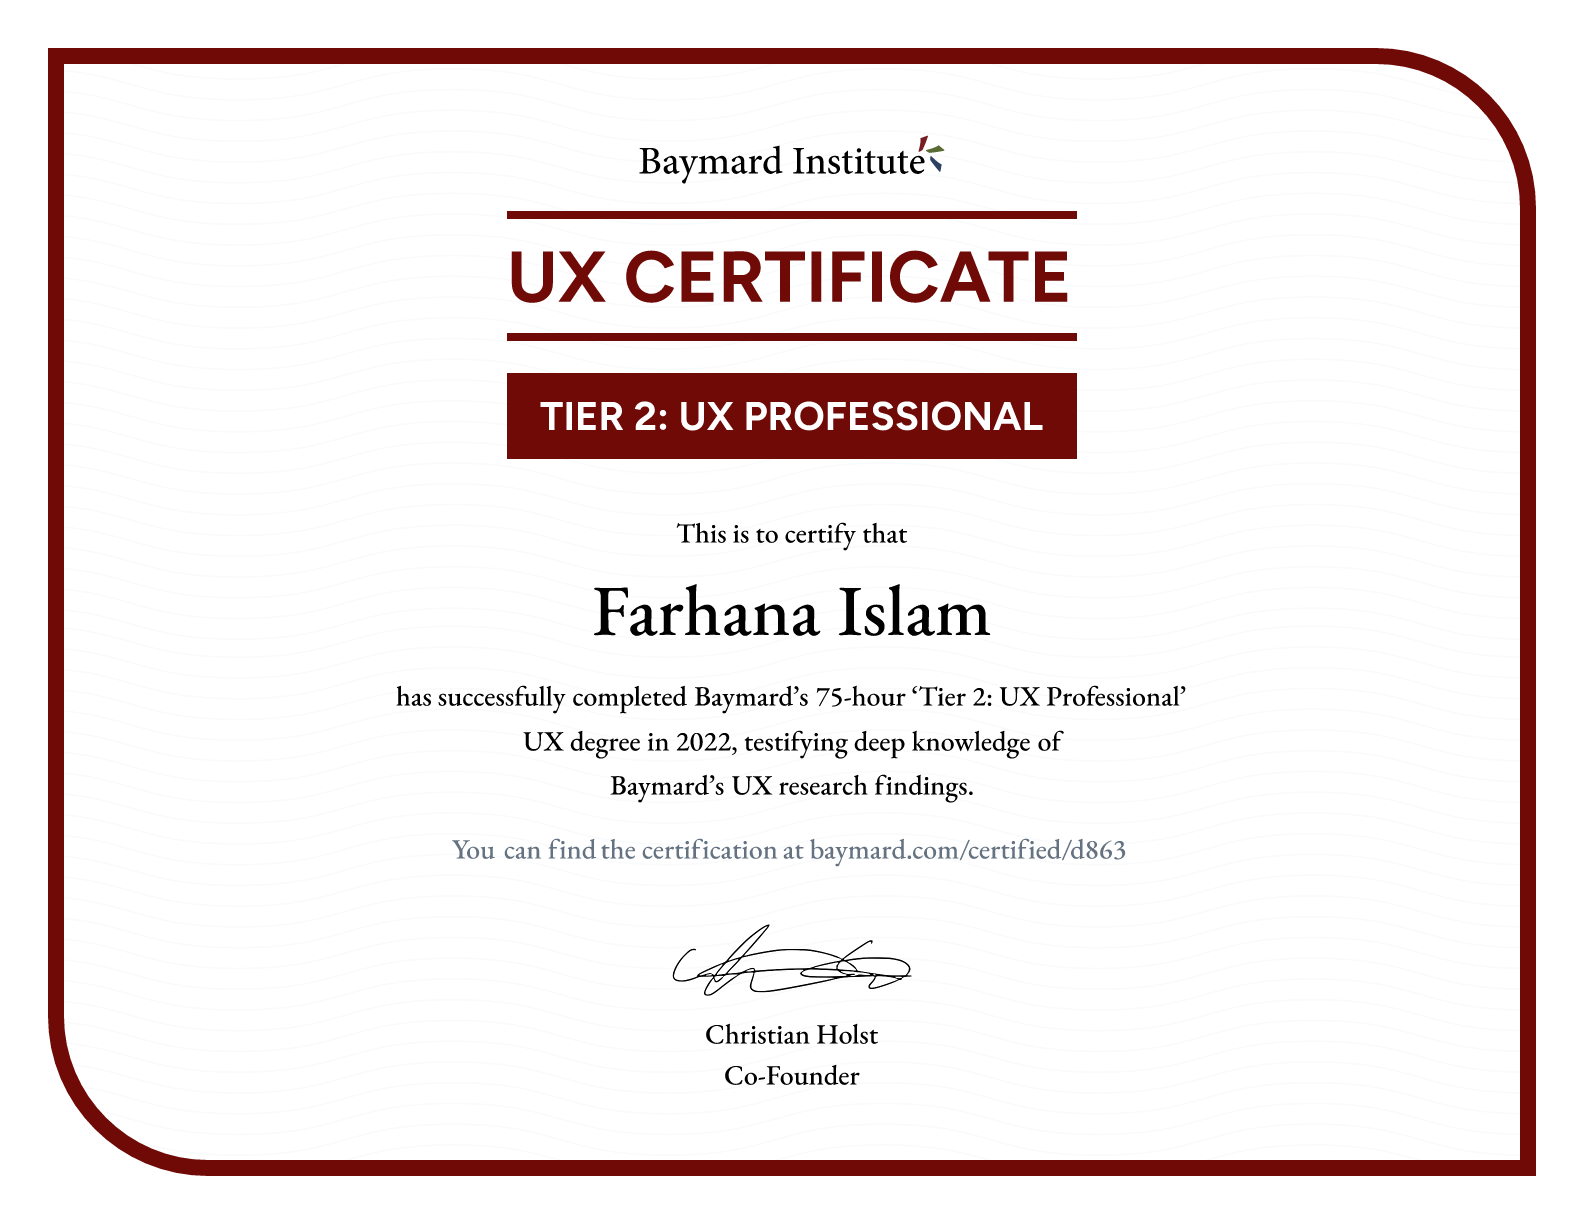 Farhana Islam’s certificate